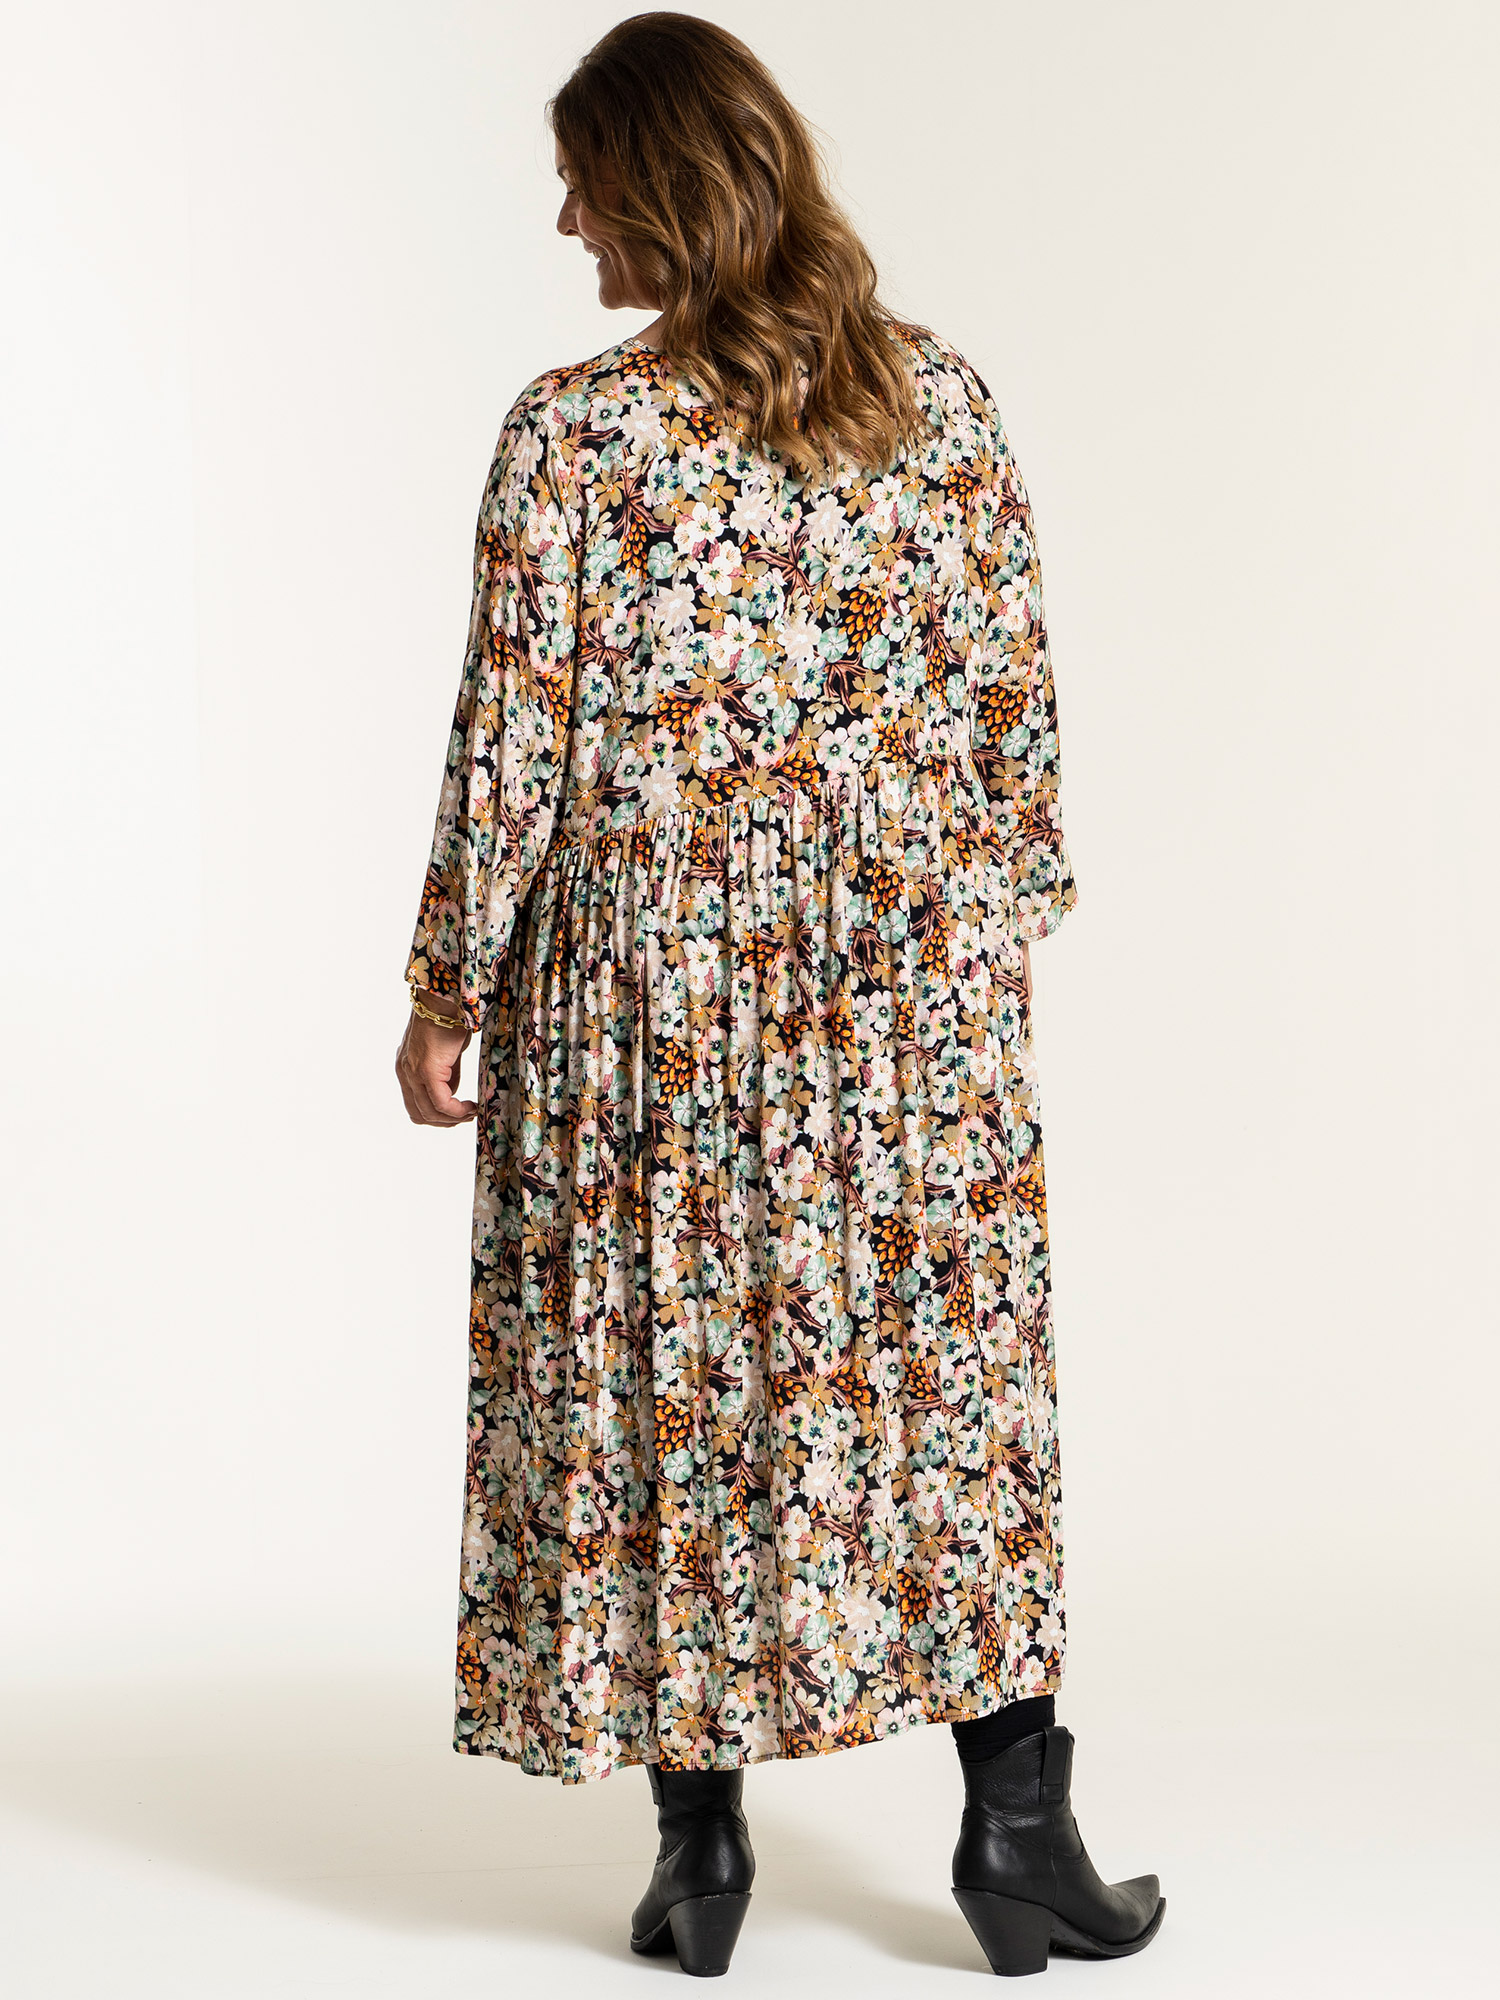 ANIKA - Lang viskose kjole i print fra Gozzip